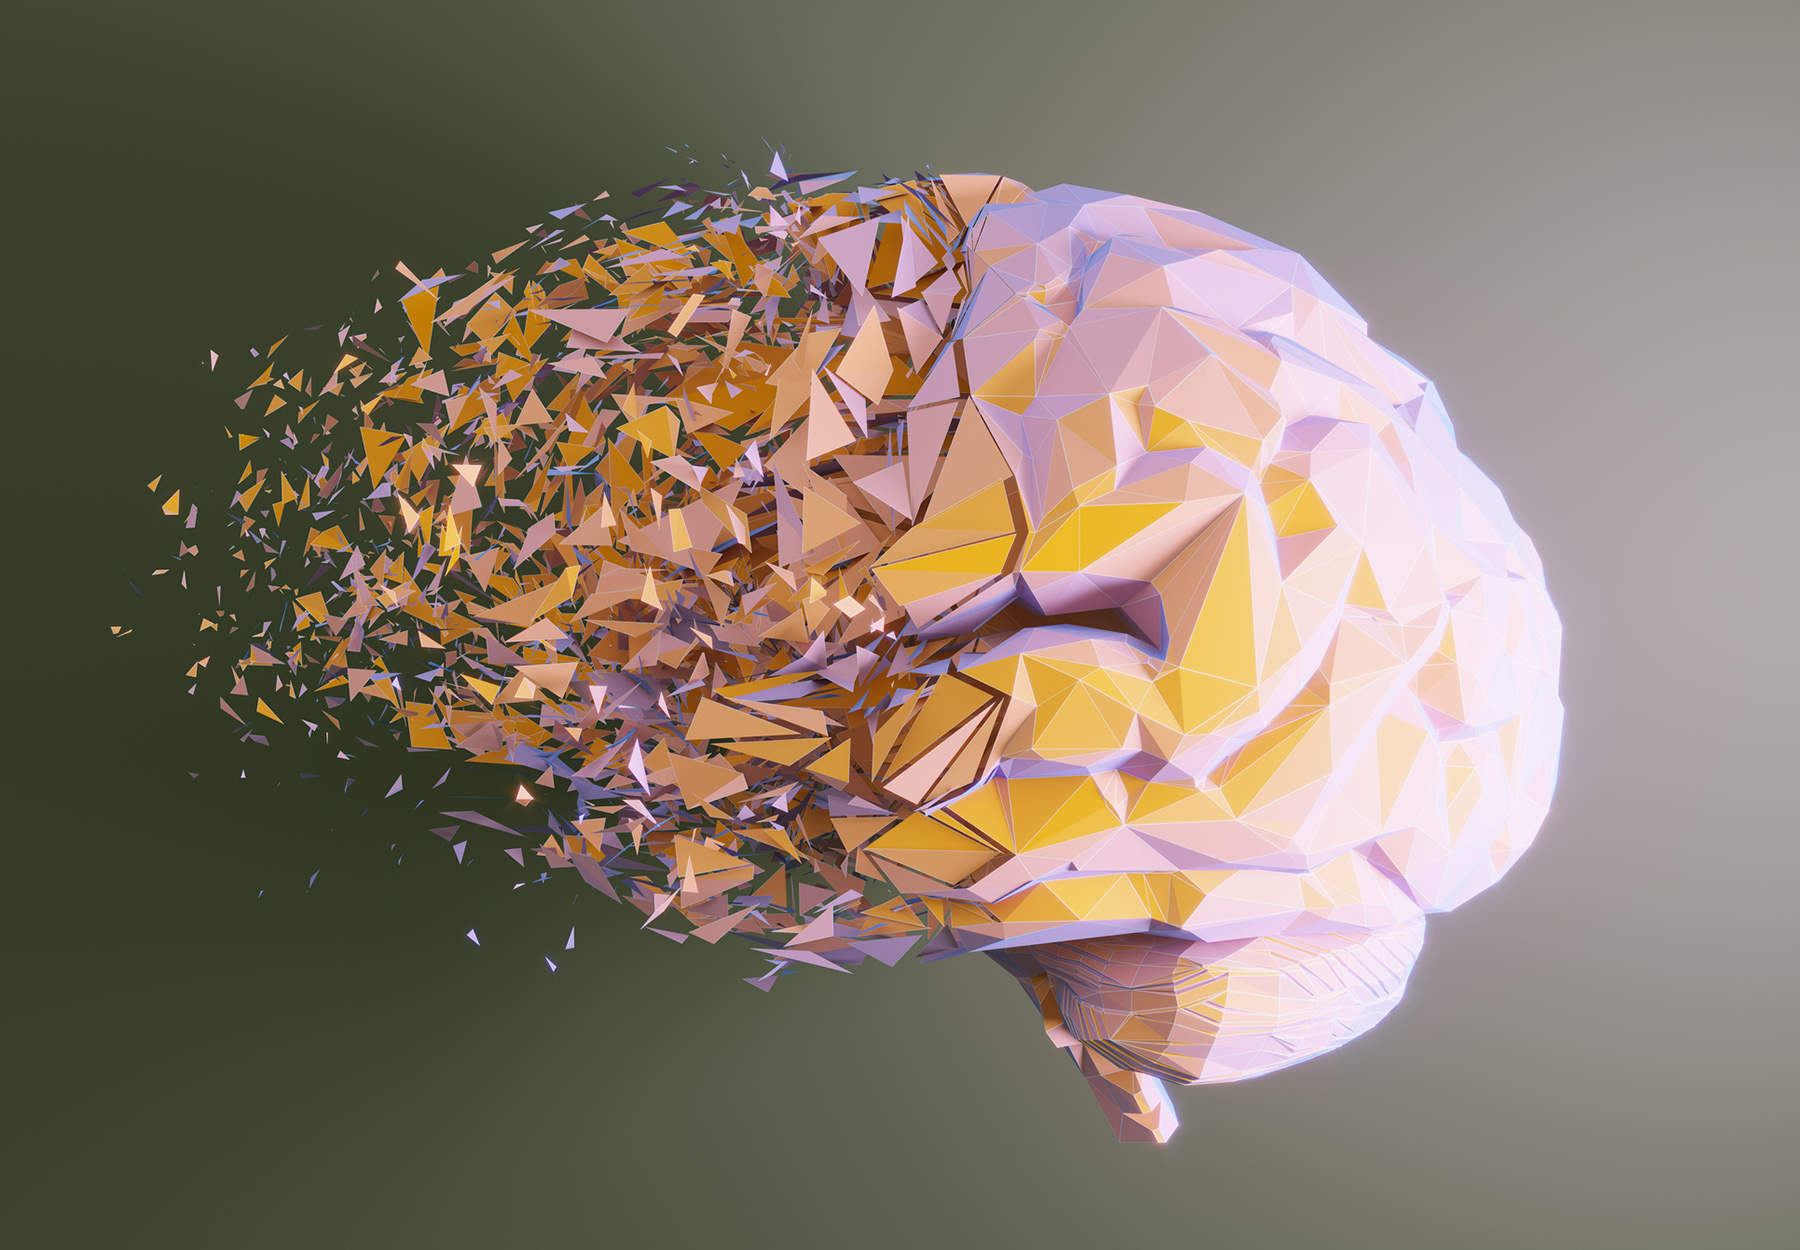 Low poly human brain dissolving, symbolizing Alzheimer's disease.